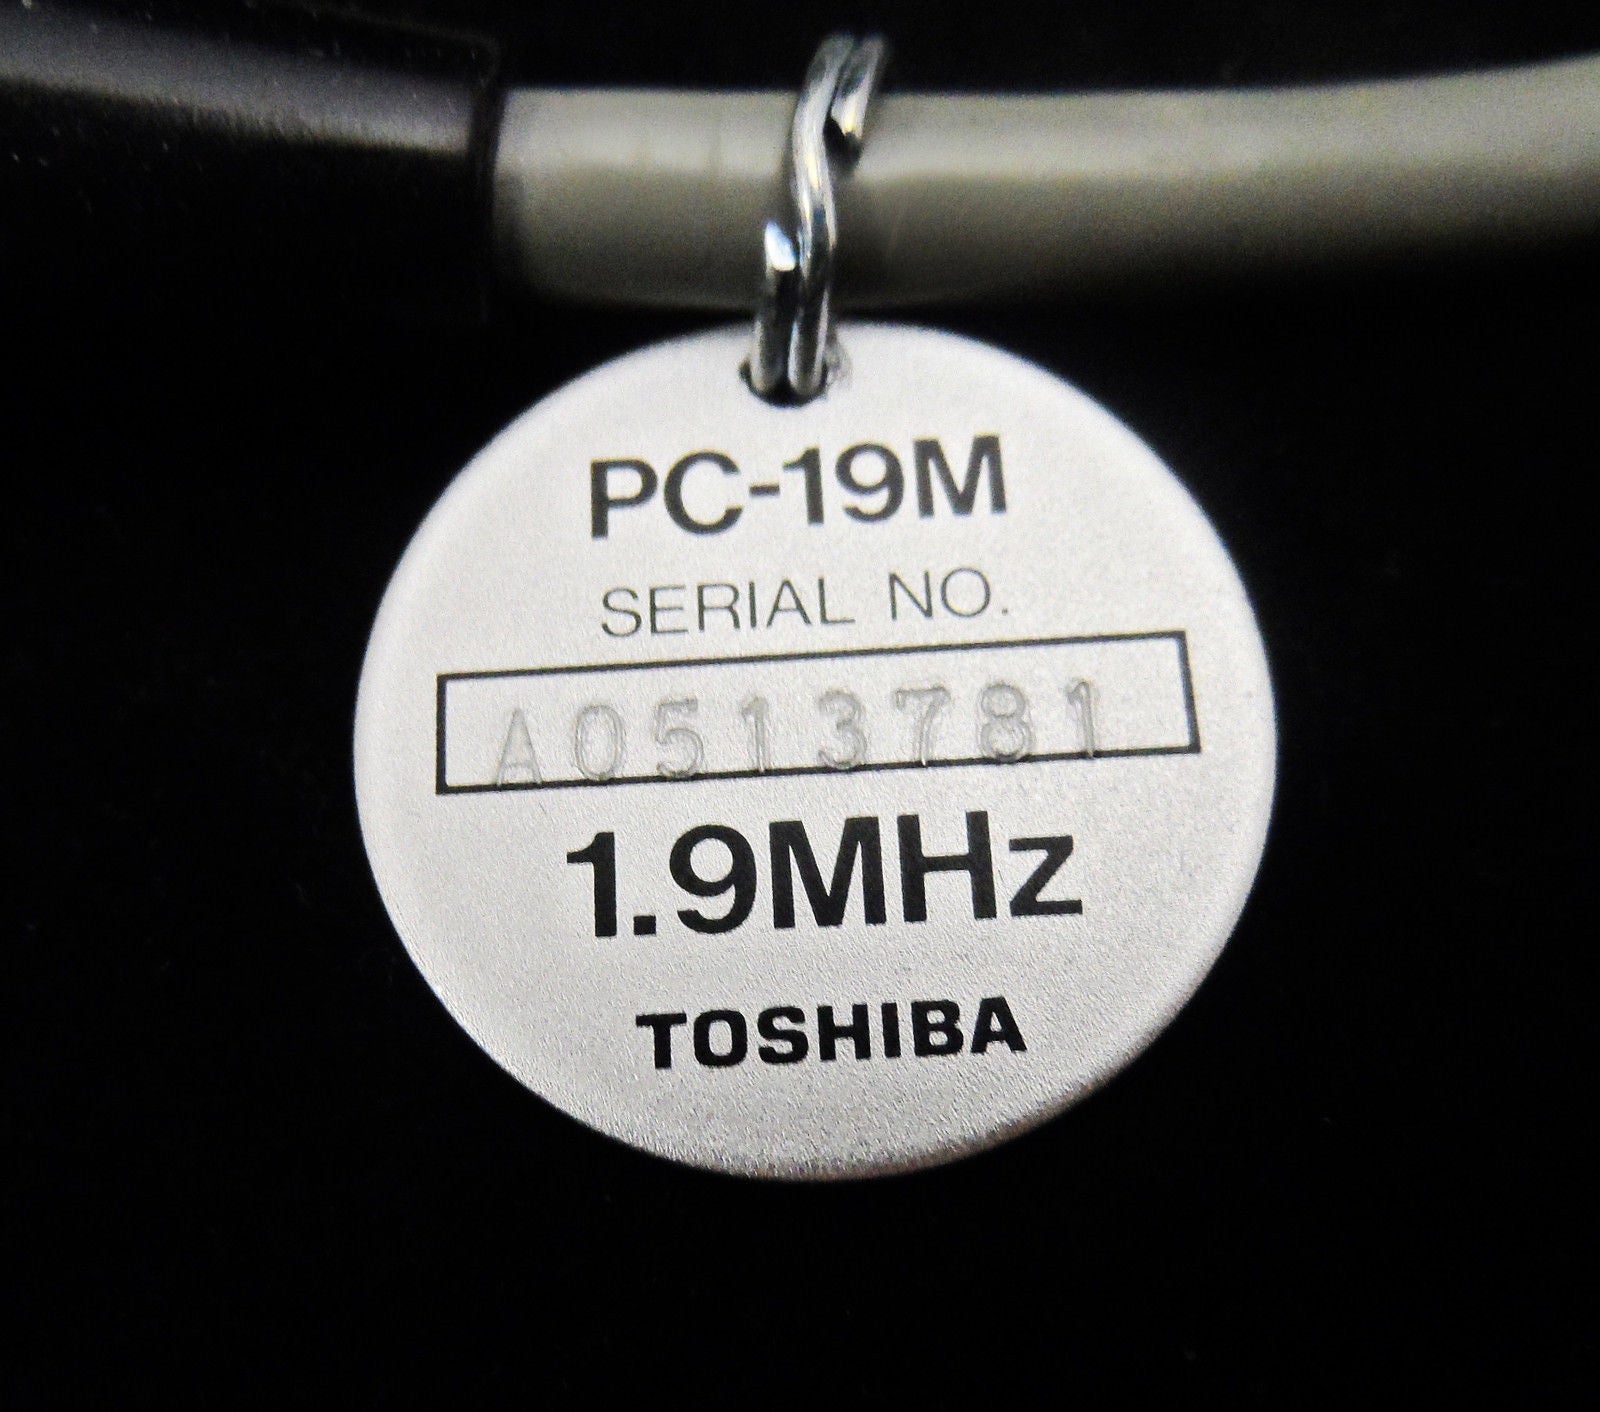 Toshiba PC-19M 1.9 MHz Cardiac CW Doppler Pencil Ultrasound Transducer Probe DIAGNOSTIC ULTRASOUND MACHINES FOR SALE